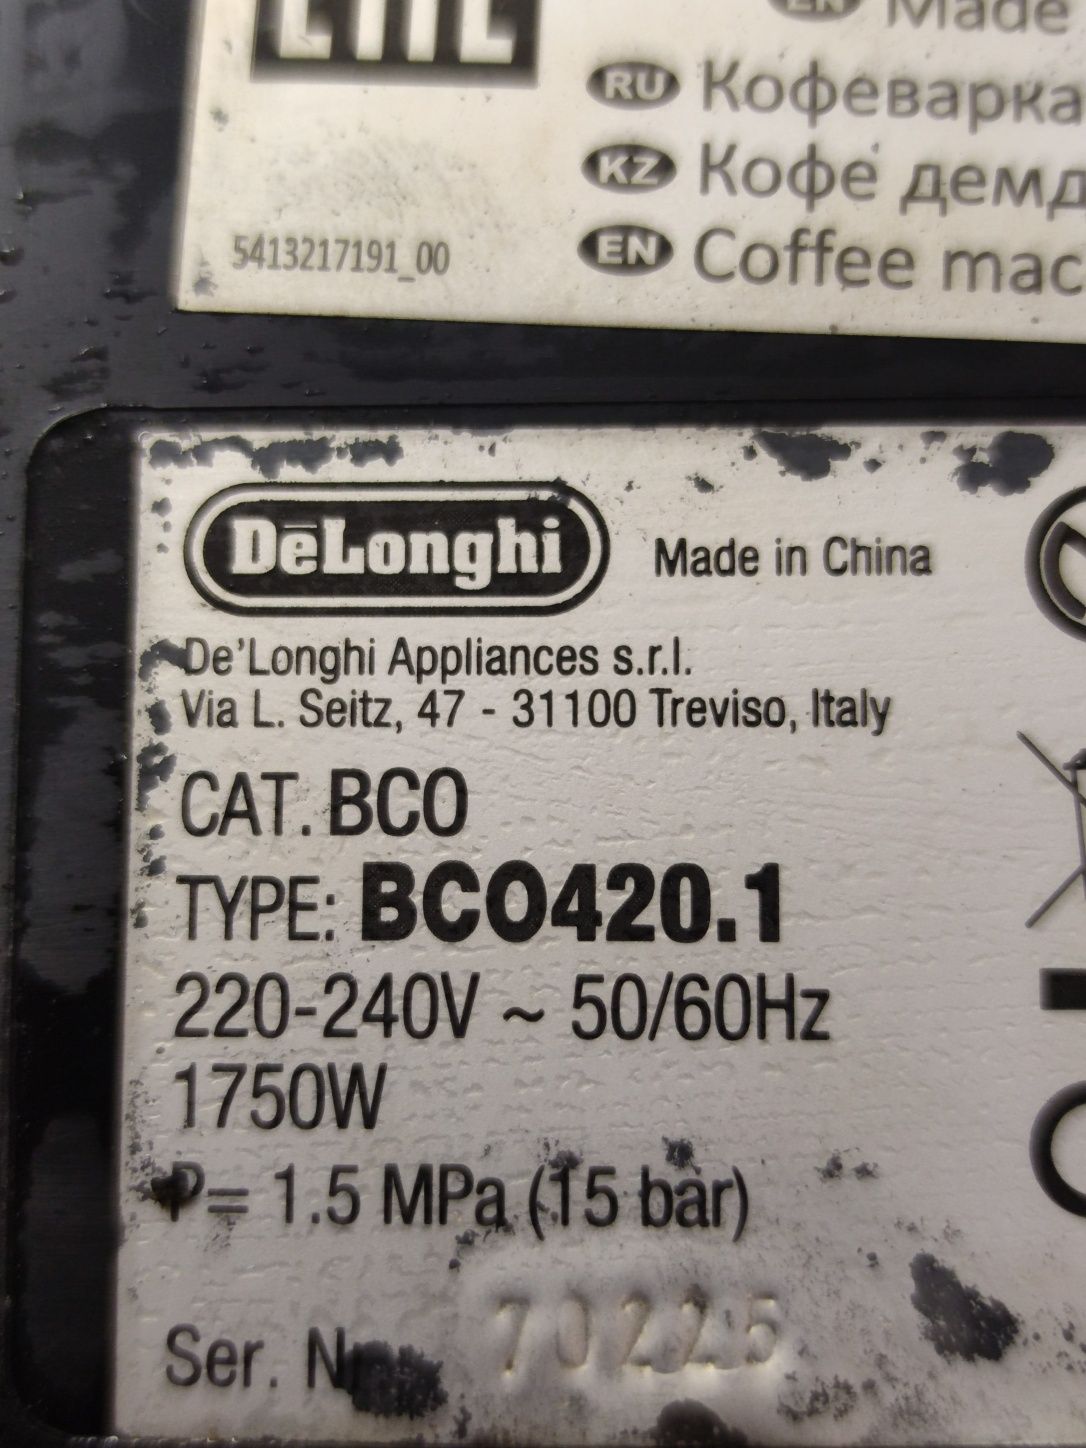 Ekspres do kawy DeLonghi BCO 420.1